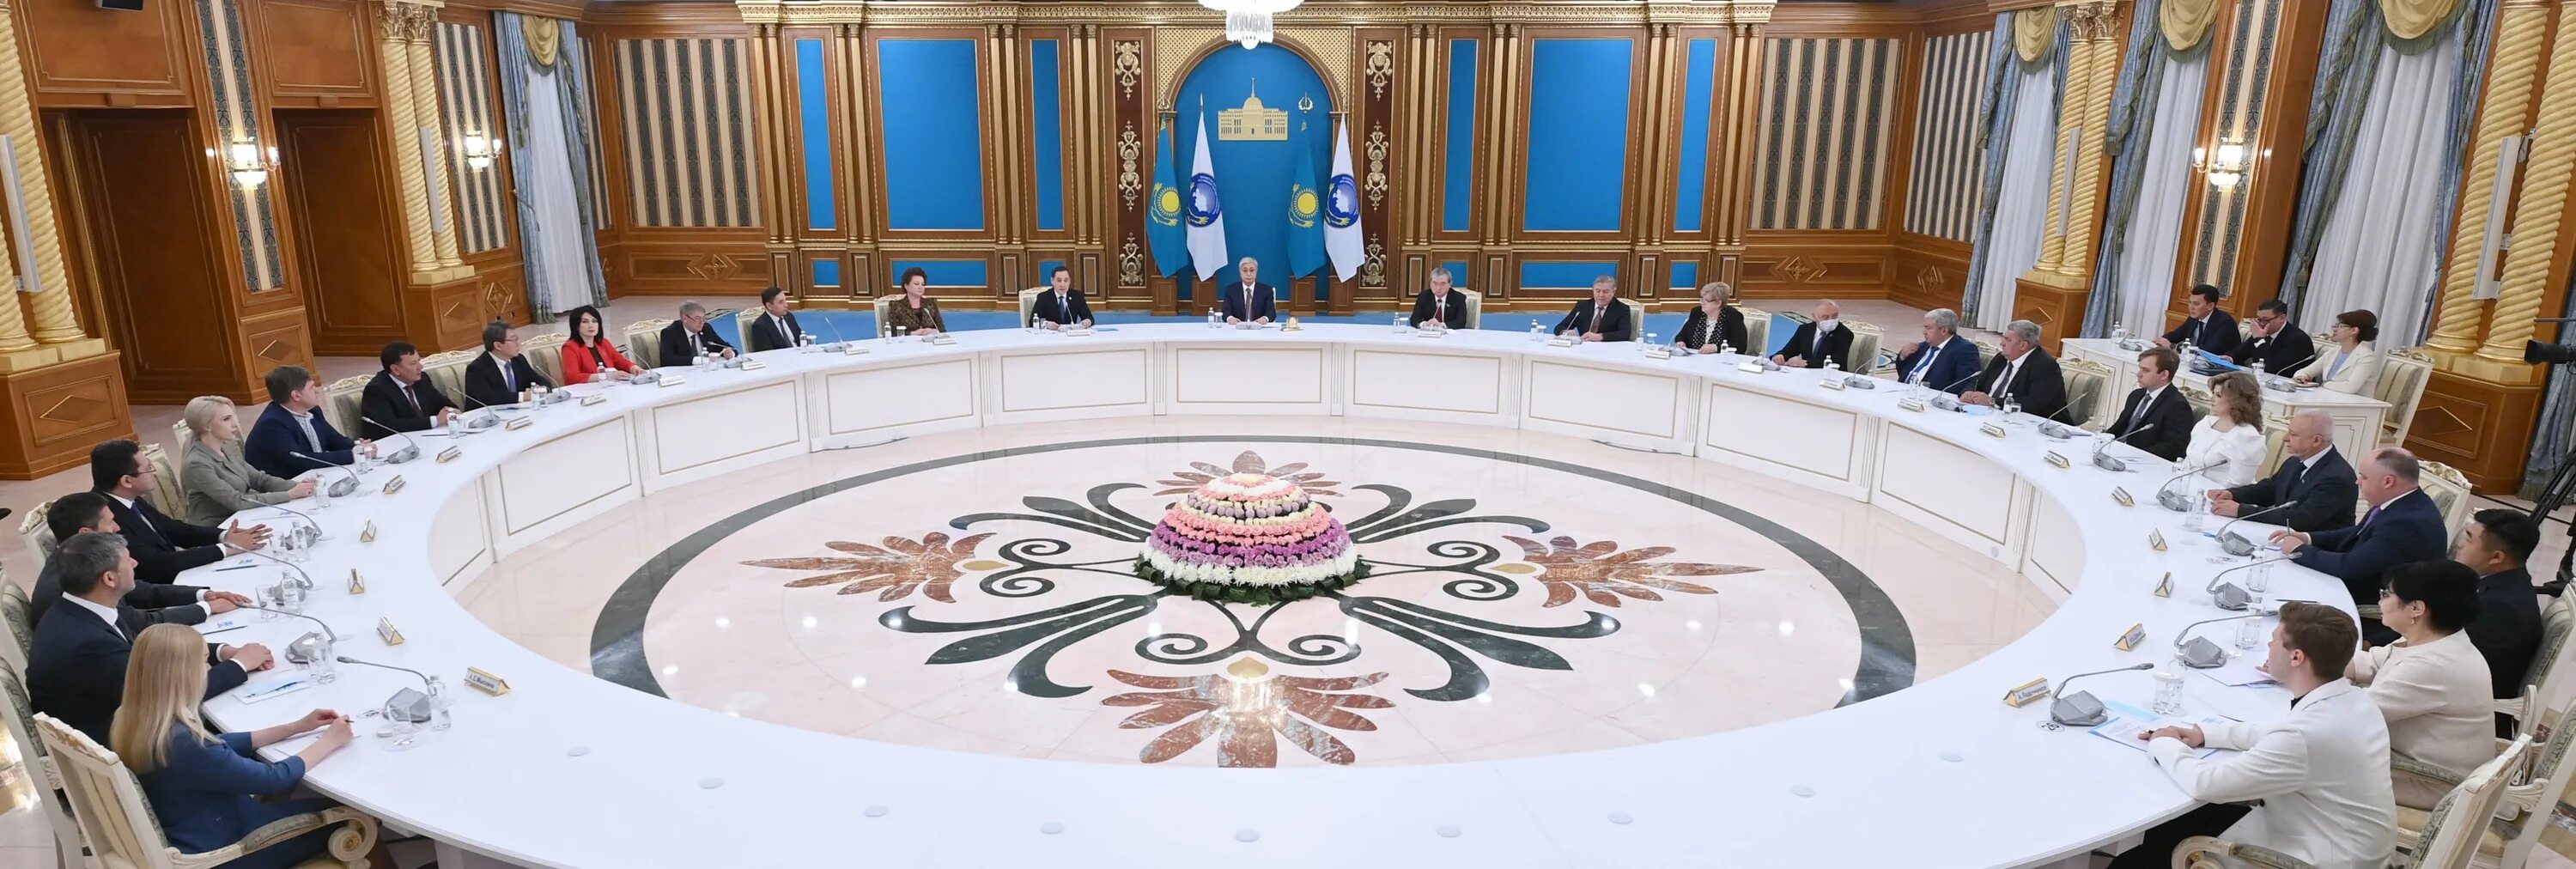 Президентская реформа. Инаугурация Назарбаева 1991. Ассамблея народа Кыргызстана.